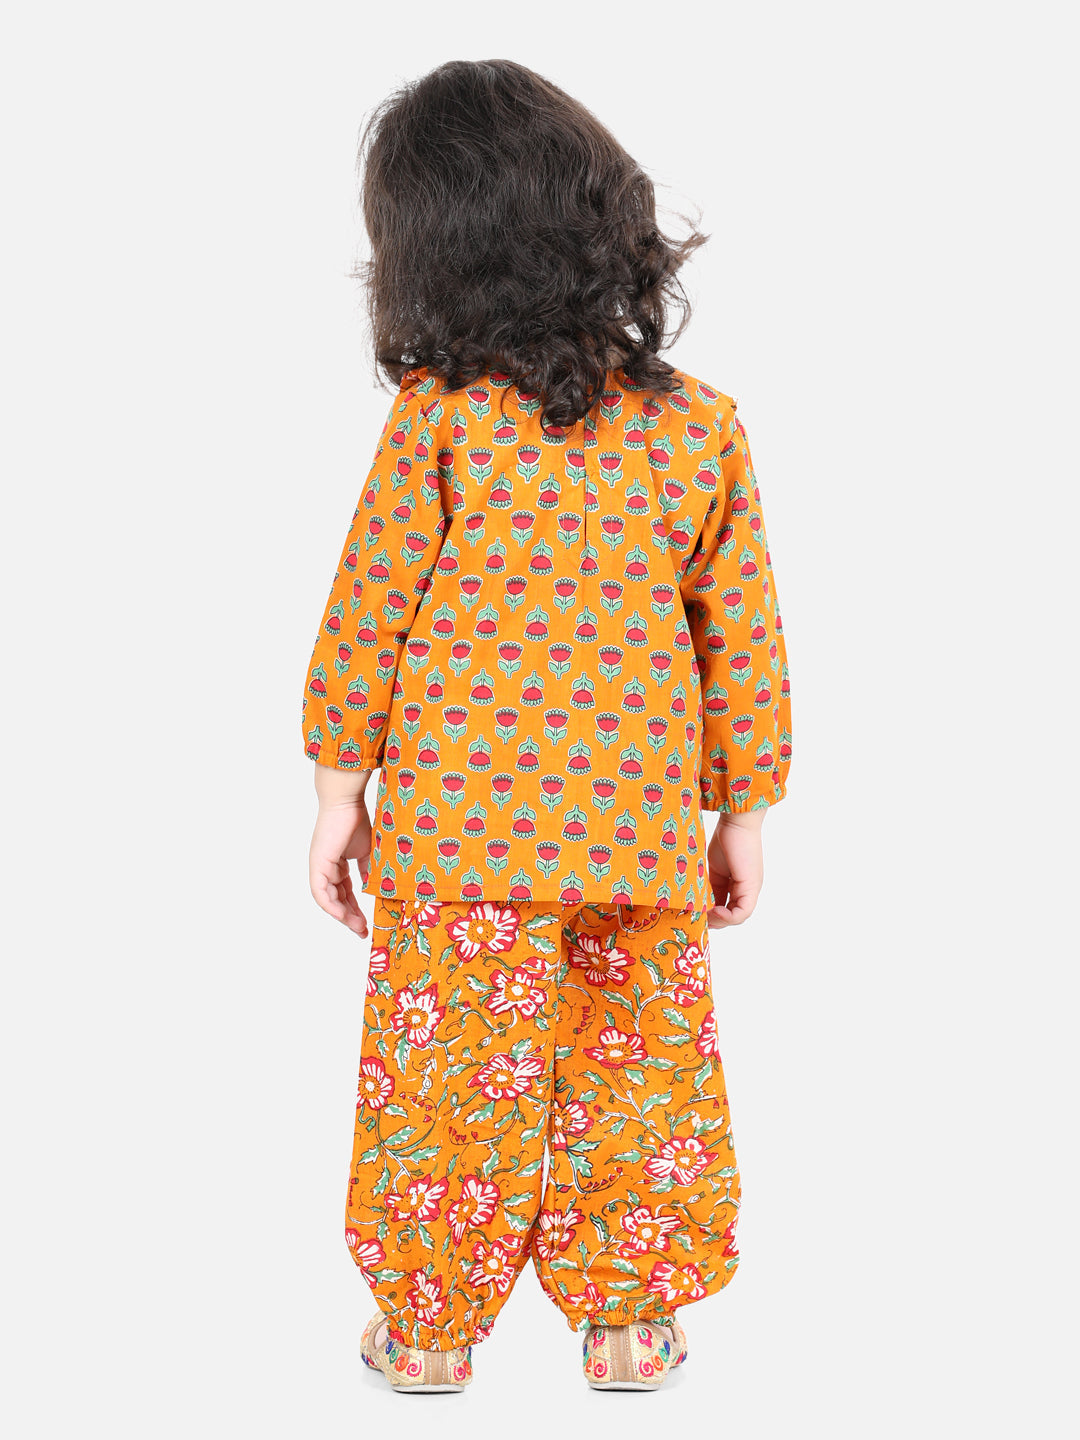 Girl's Cotton Orange Sets - Bownbee